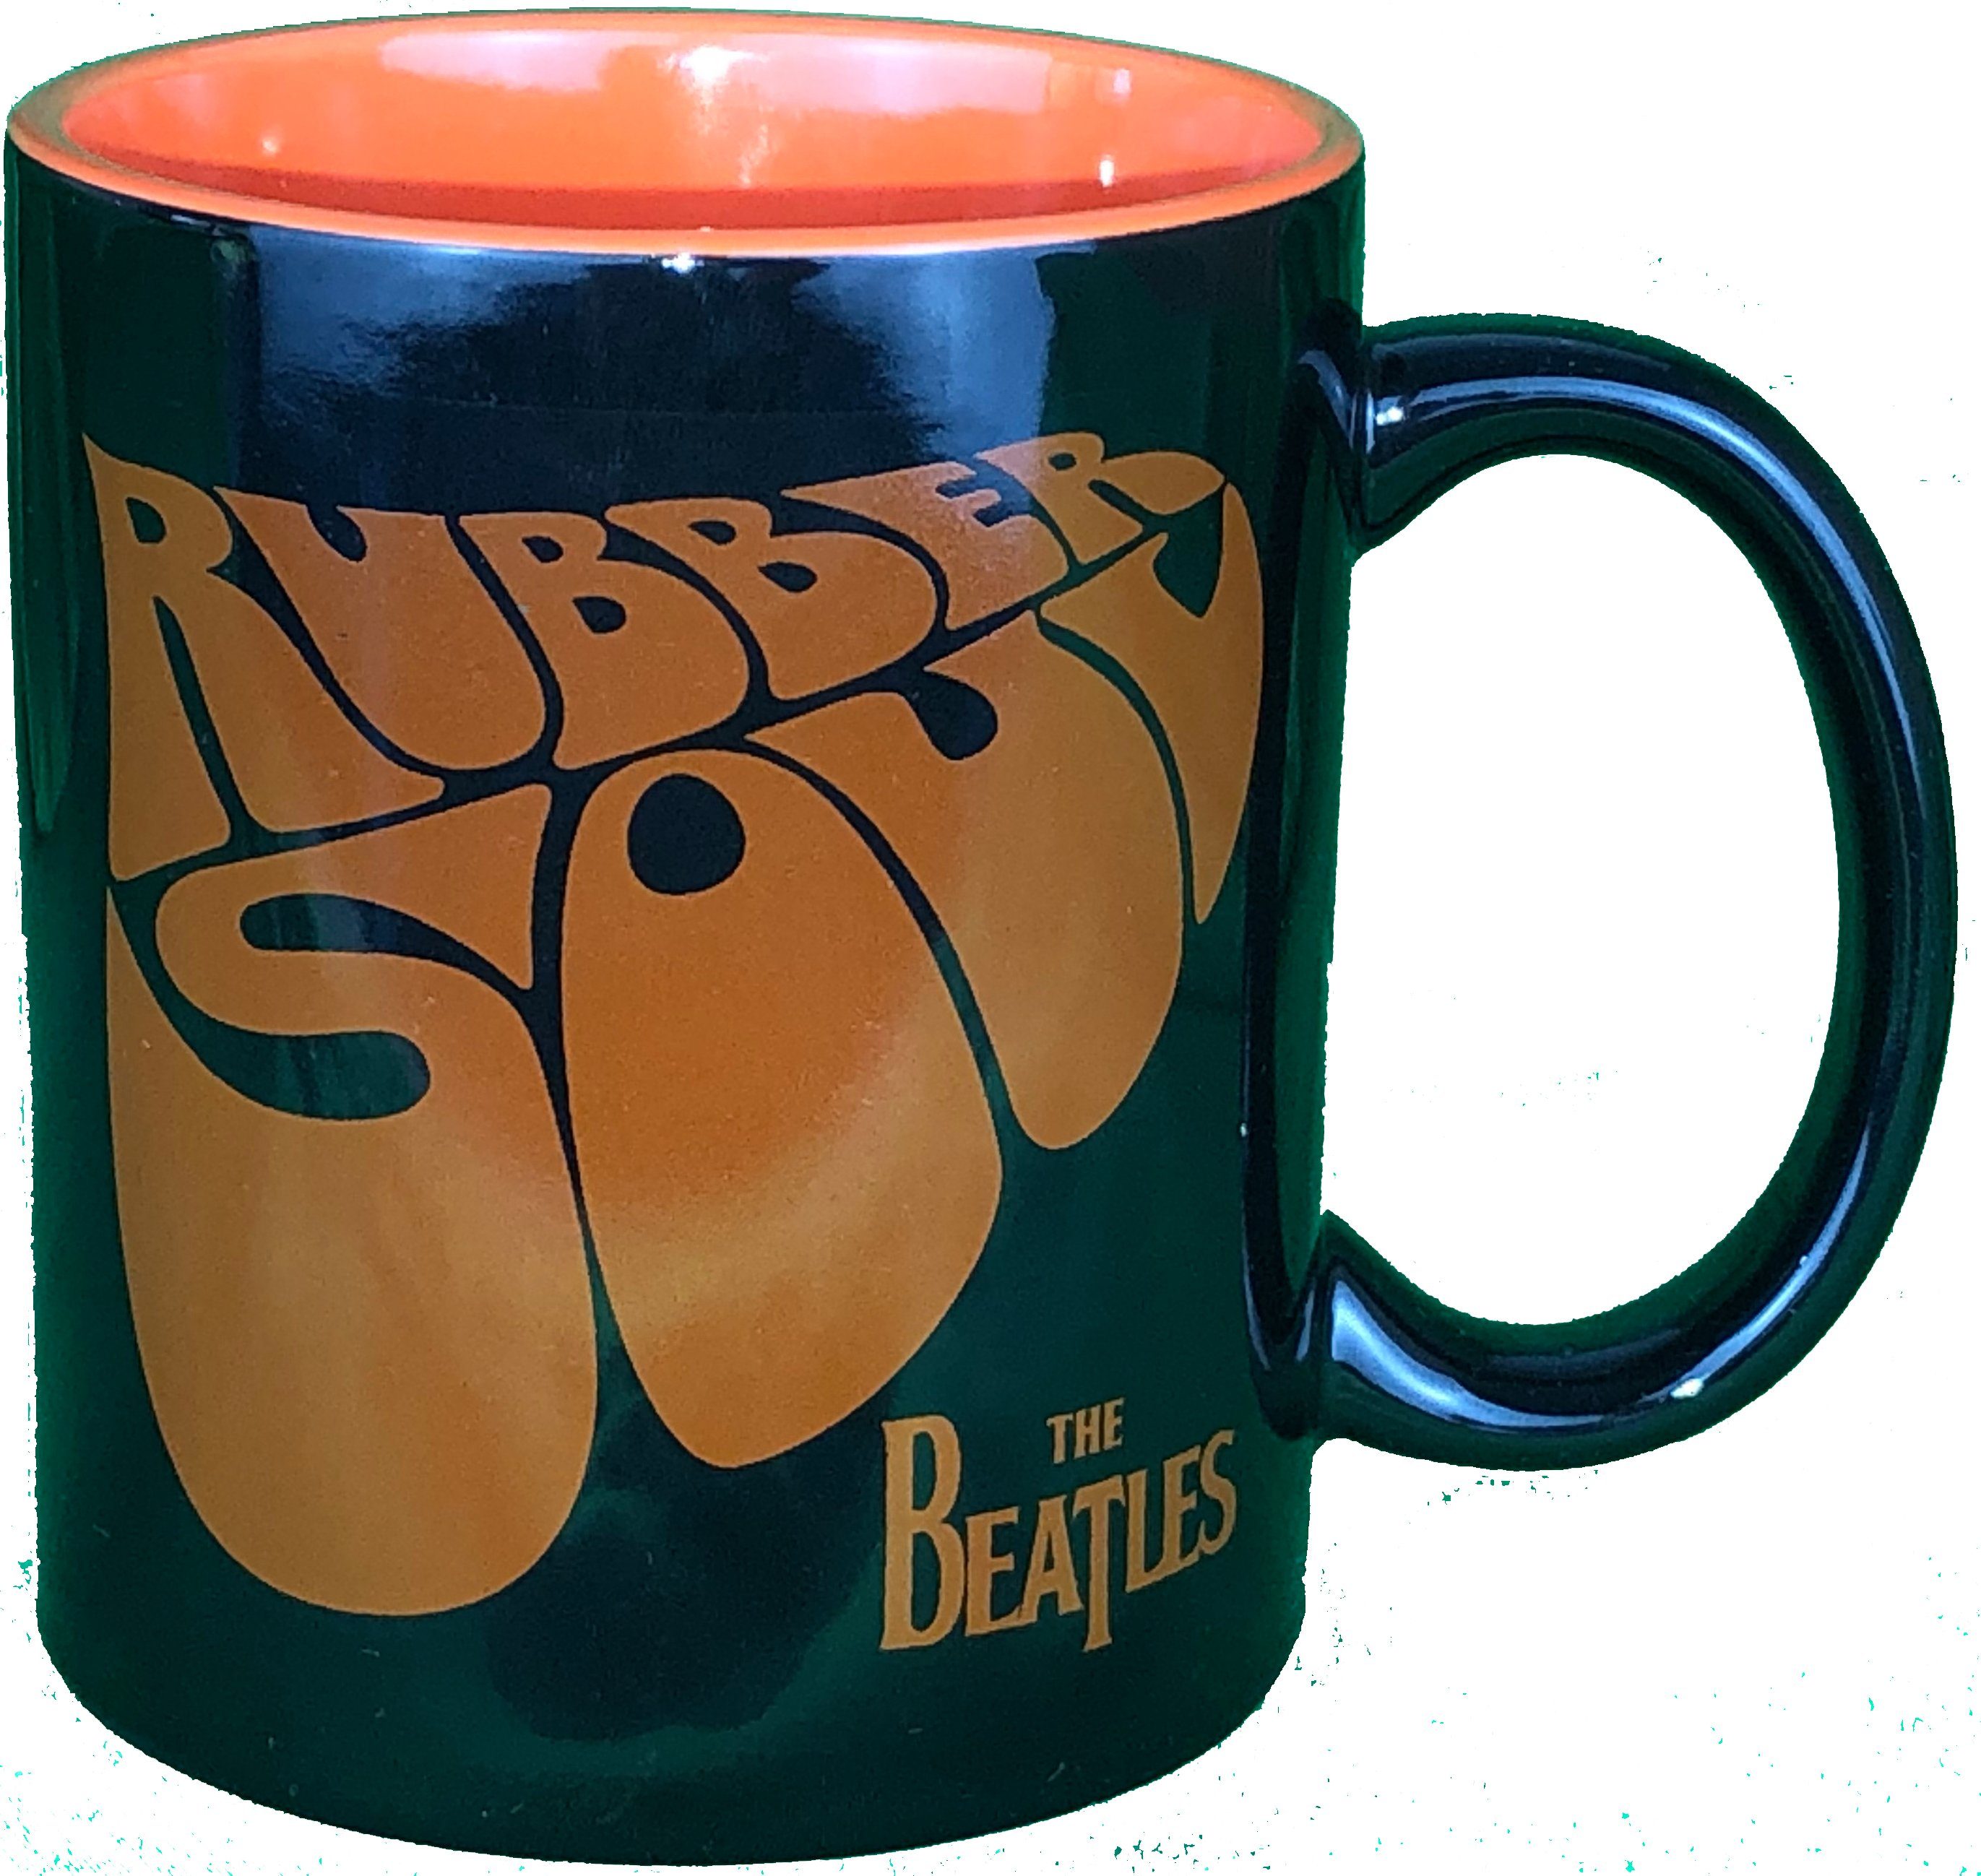 The Beatles Tasse, Keramik, 300 ml